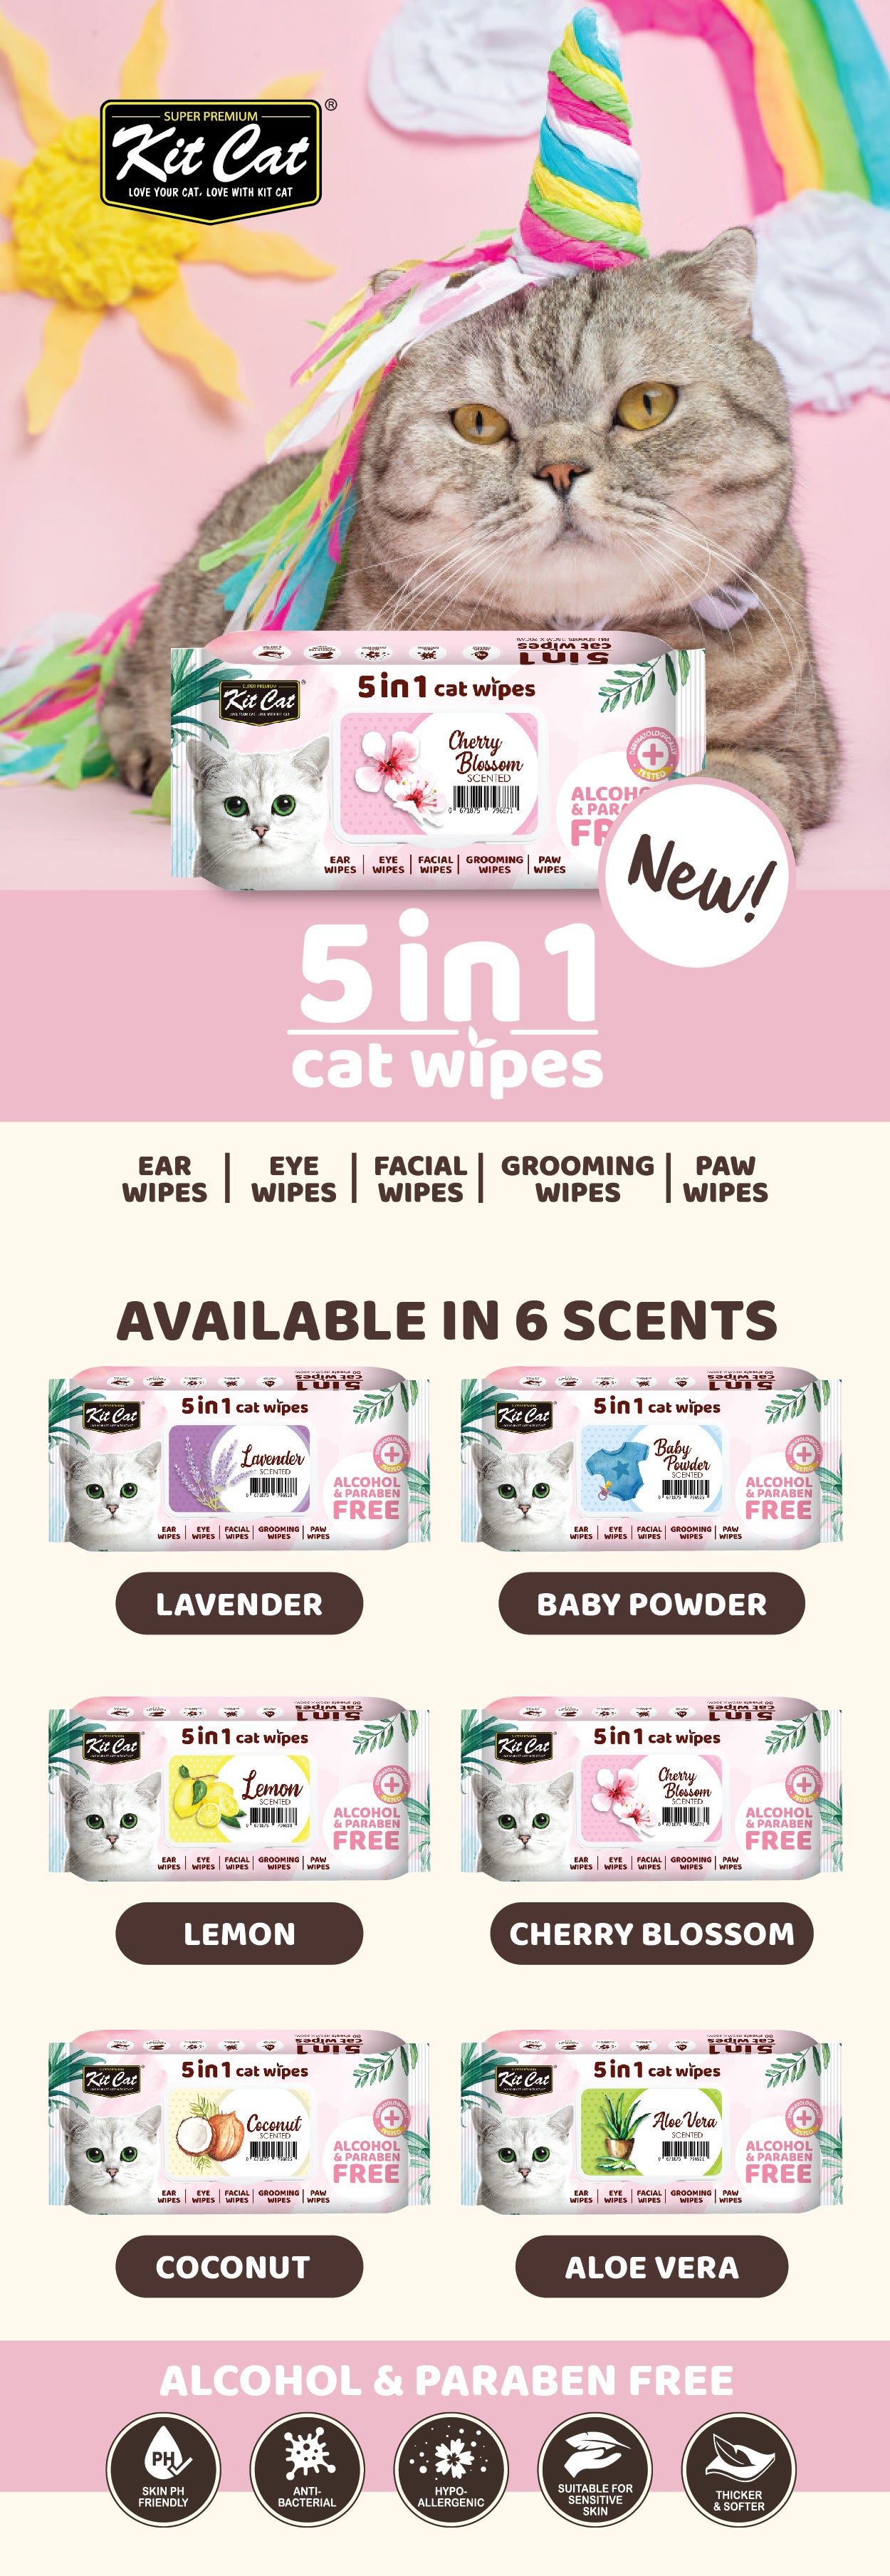 Kit Cat 5 in 1 Cat Wipes - Baby Powder (80pcs) | Paraben & Alcohol Free